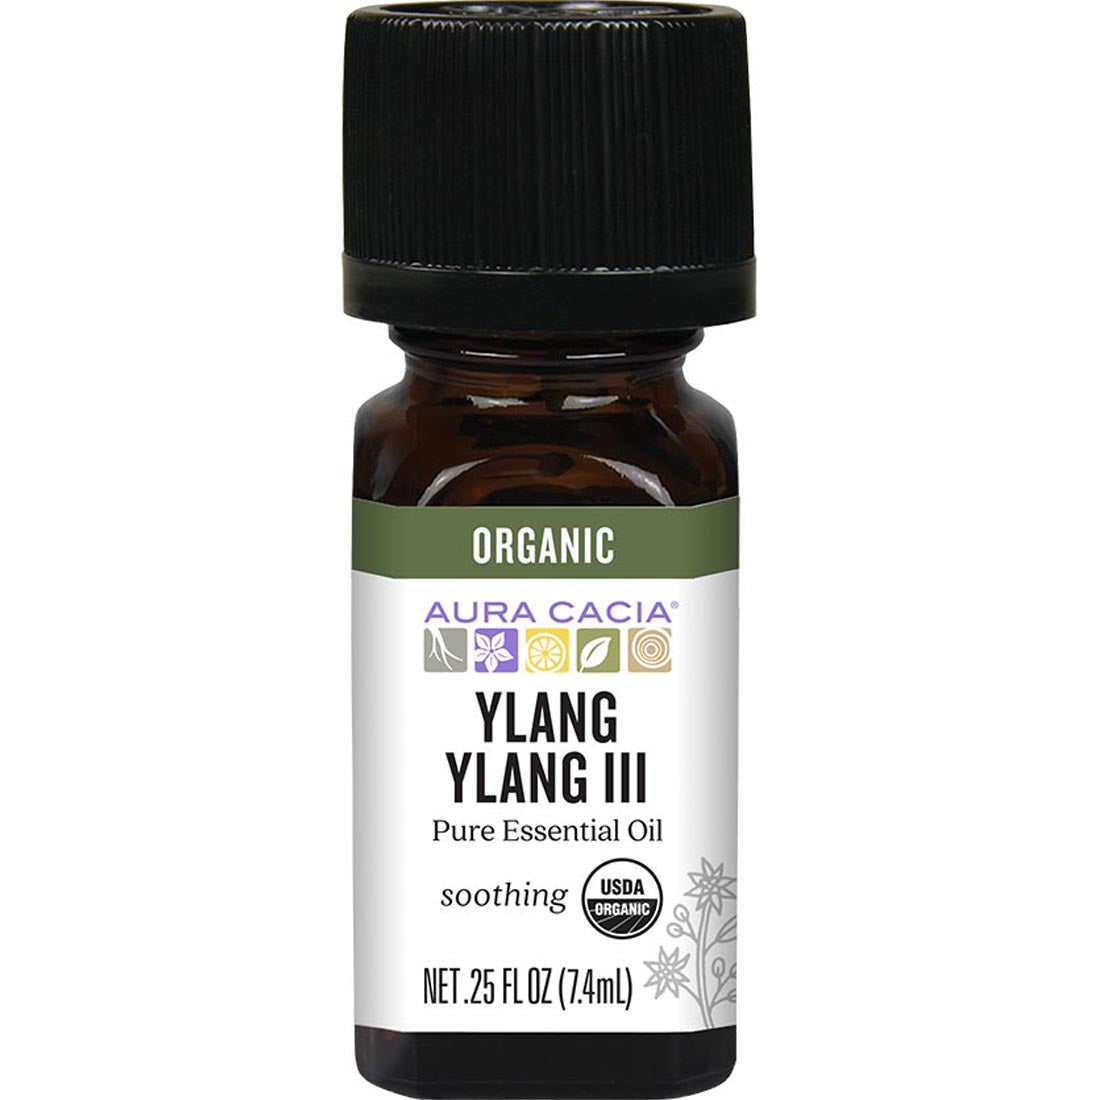 Aura Cacia Organic Ylang Ylang III Organic Essential Oil, 7ml